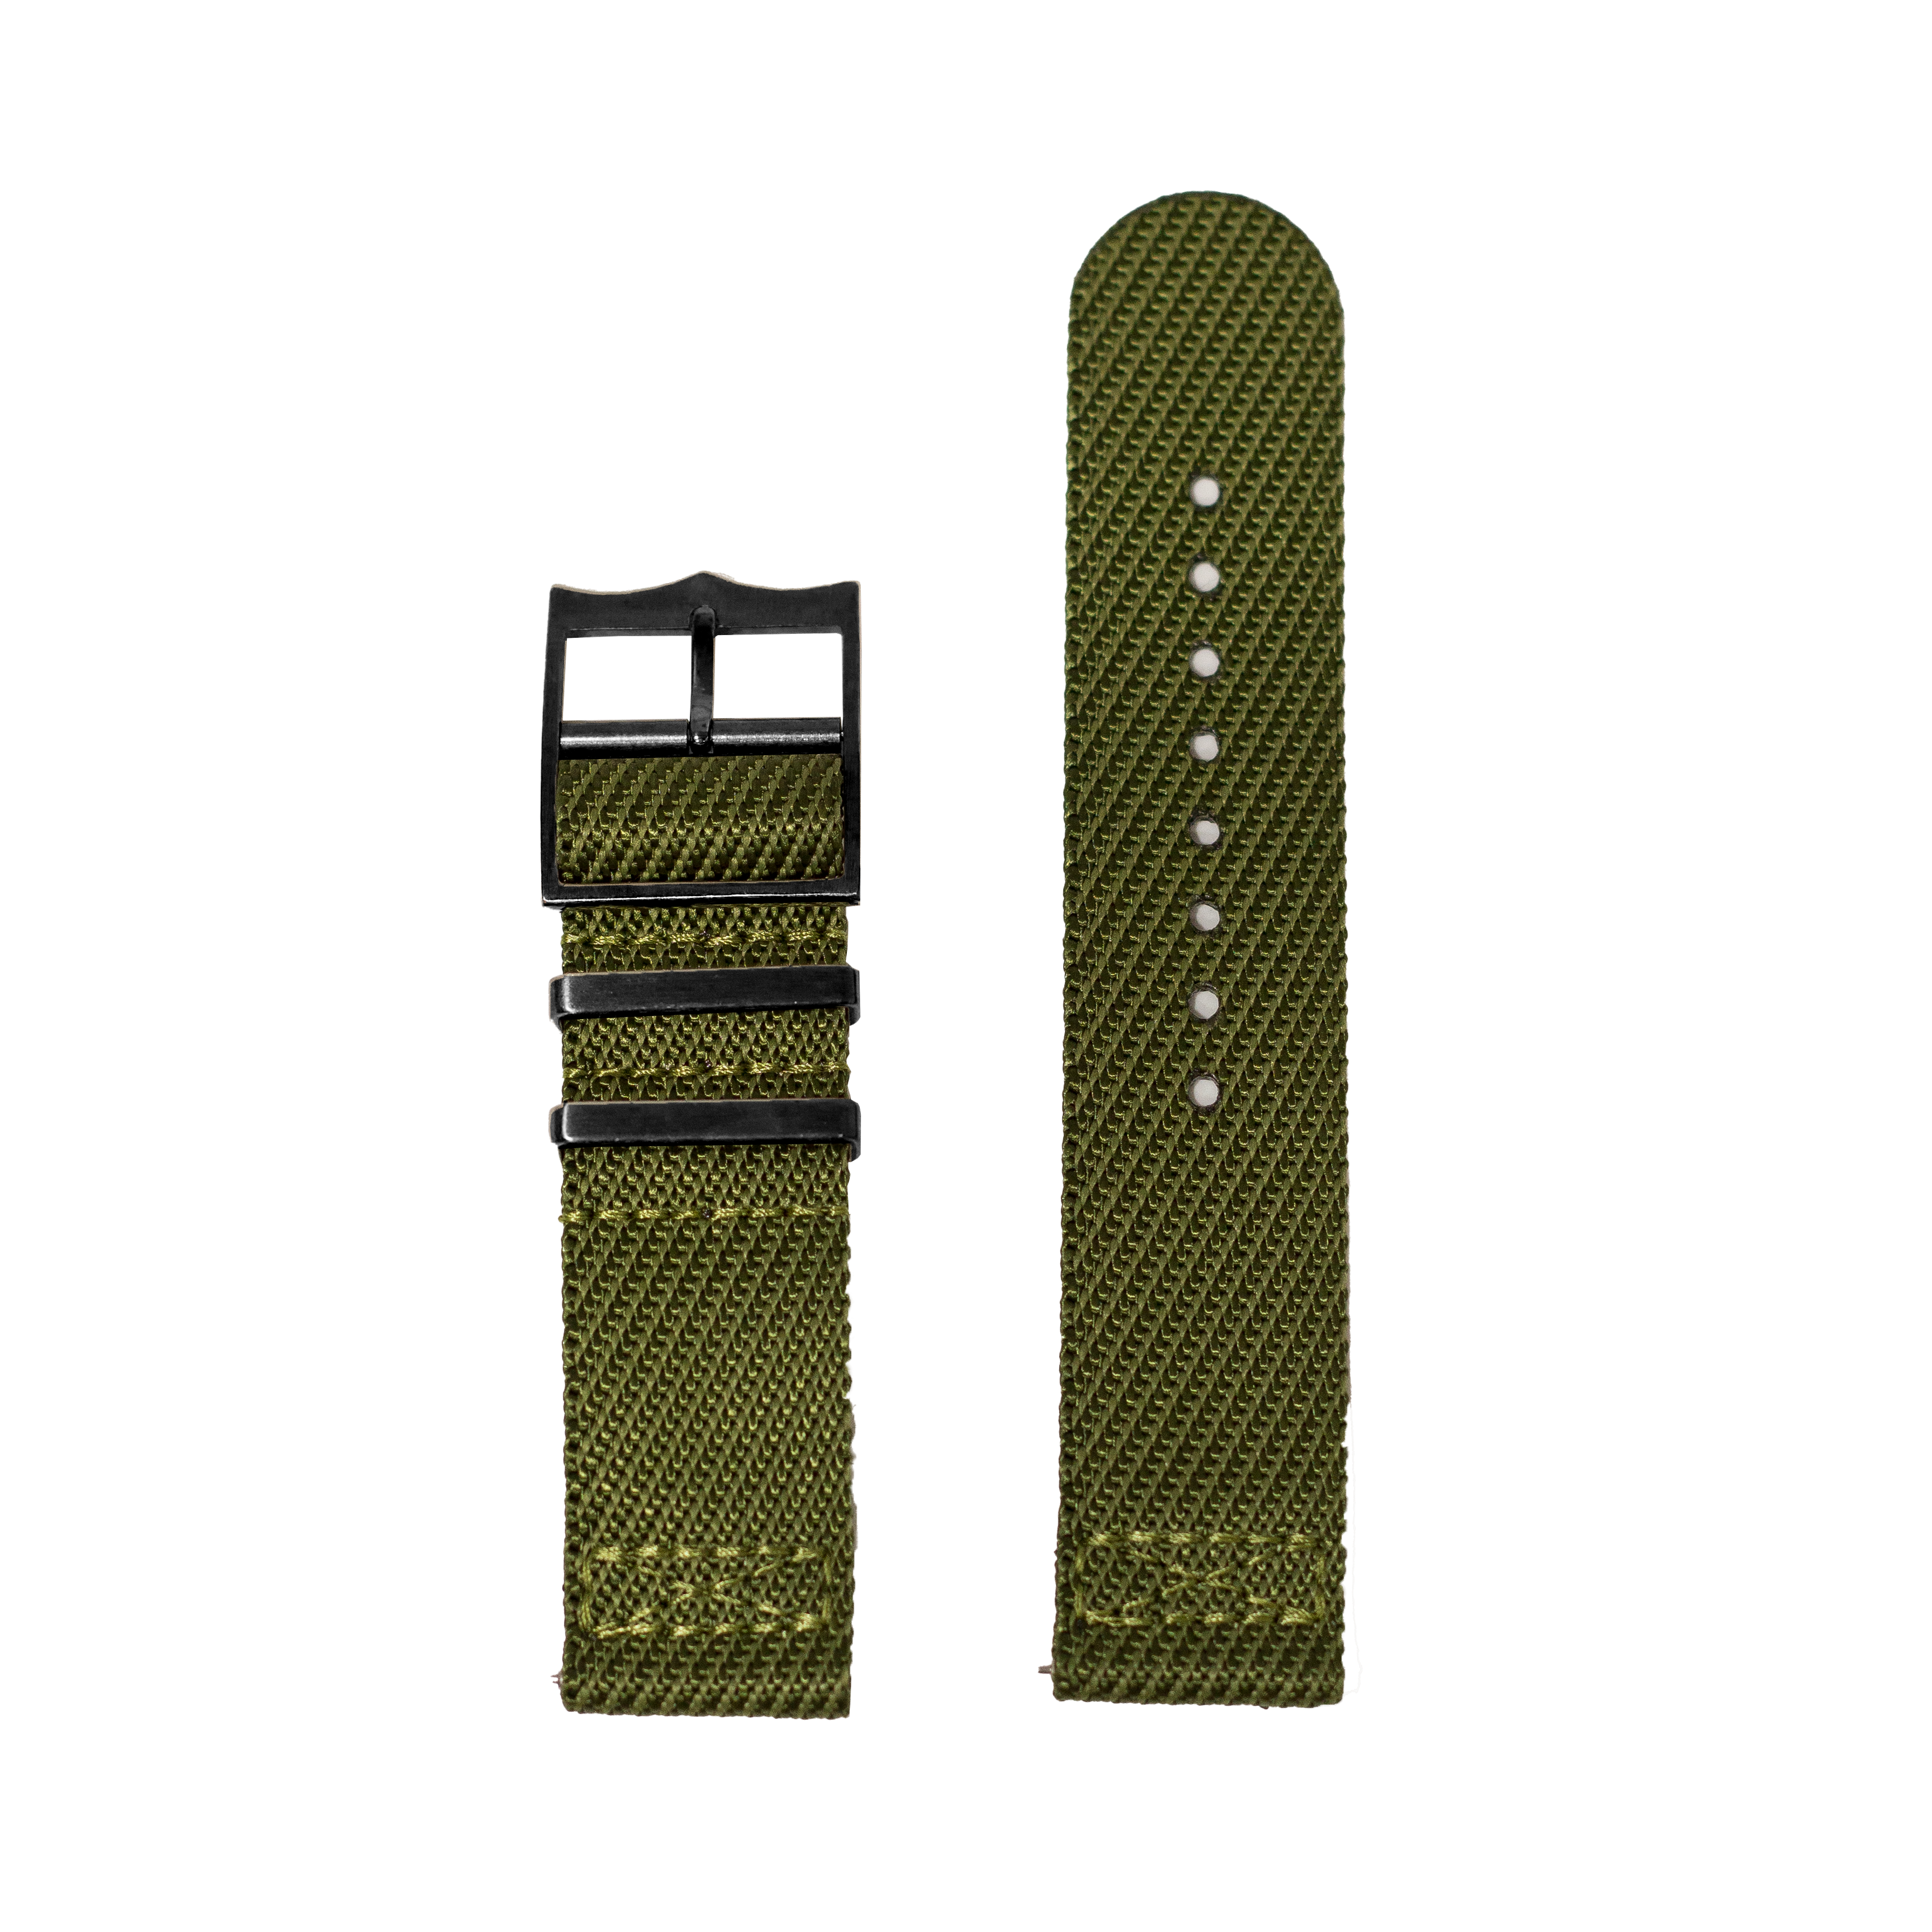 [QuickFit] Cross Militex - Army Green [Black Hardware] 22mm